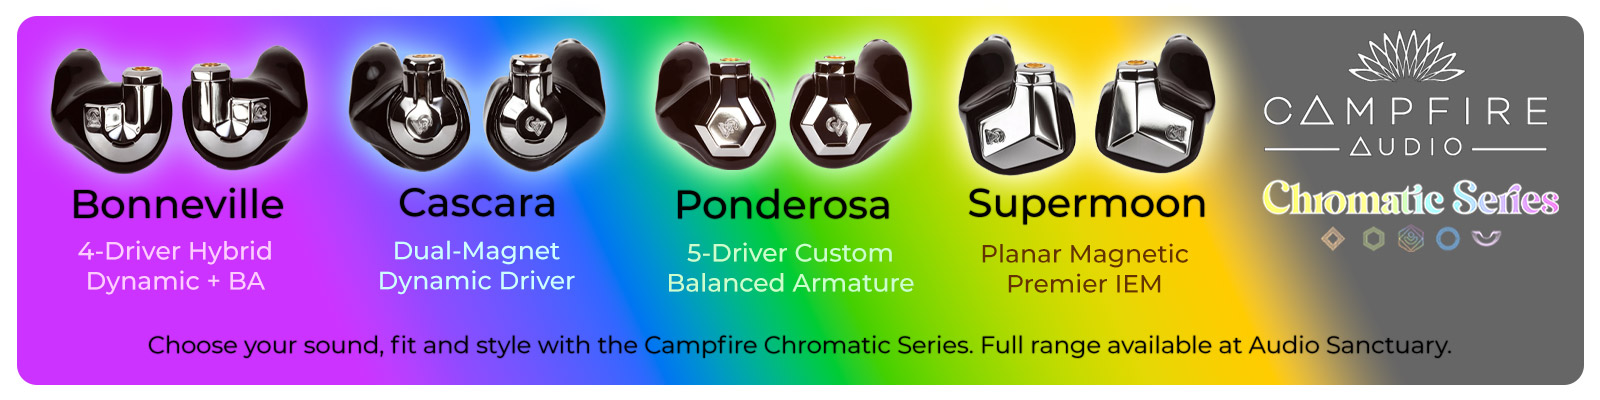 Chromatic Series + Full Range | Campfire Audio